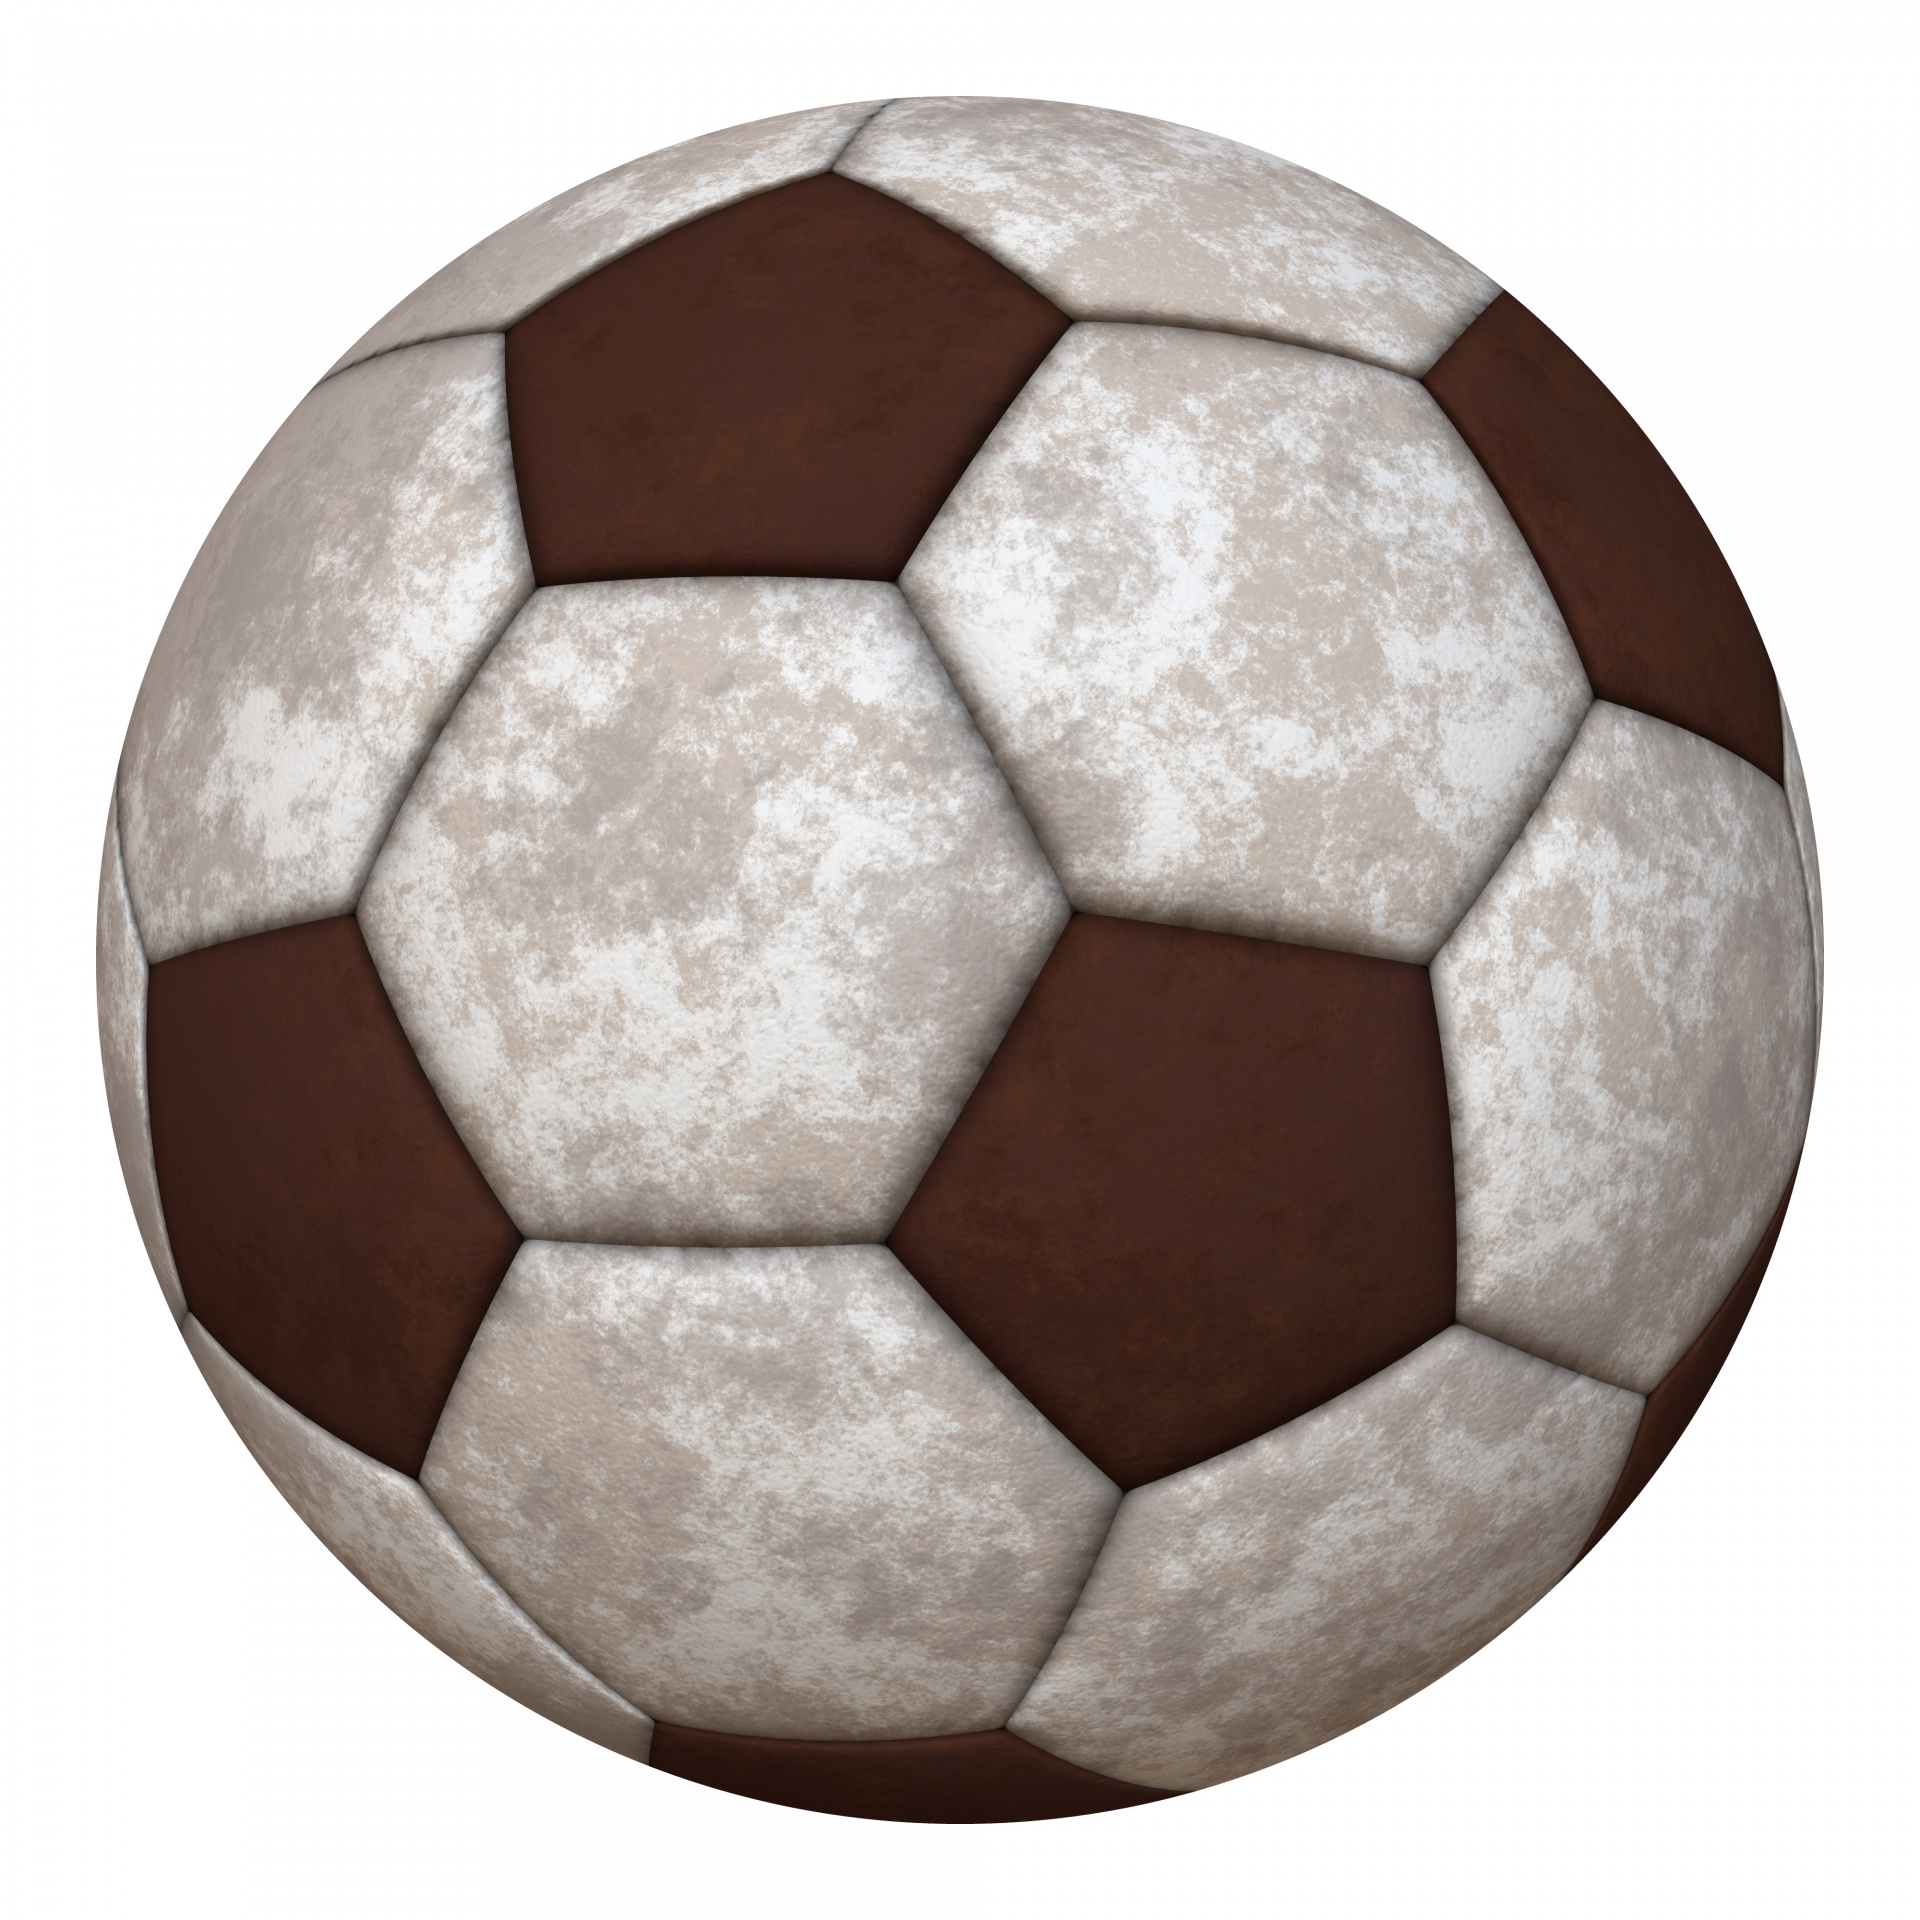 Brown Soccer Ball